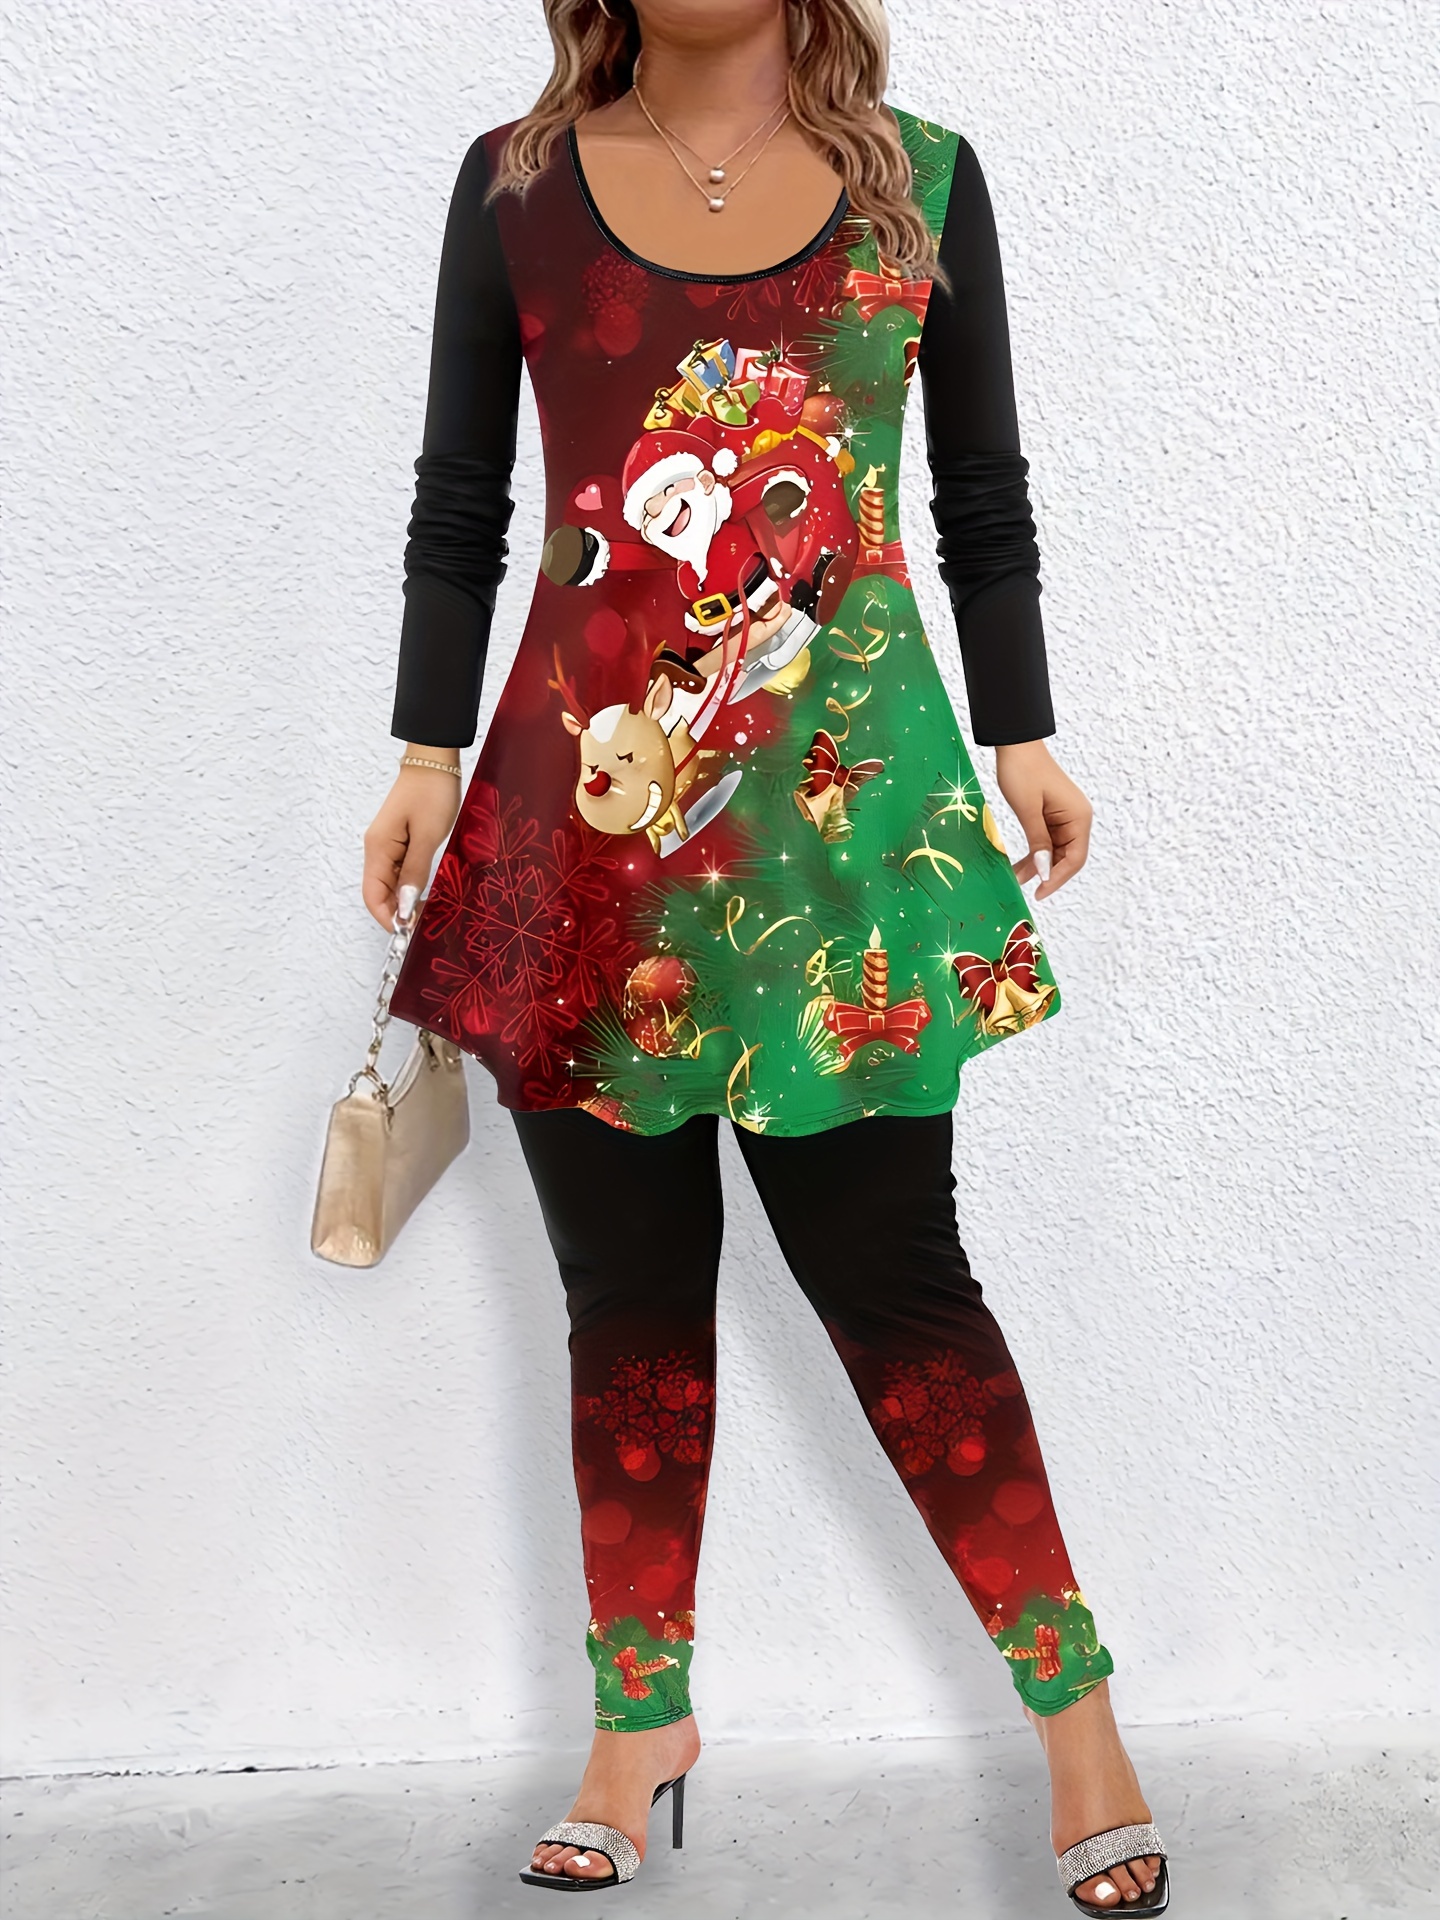 Santa Plus Size Leggings: Women's Christmas Outfits